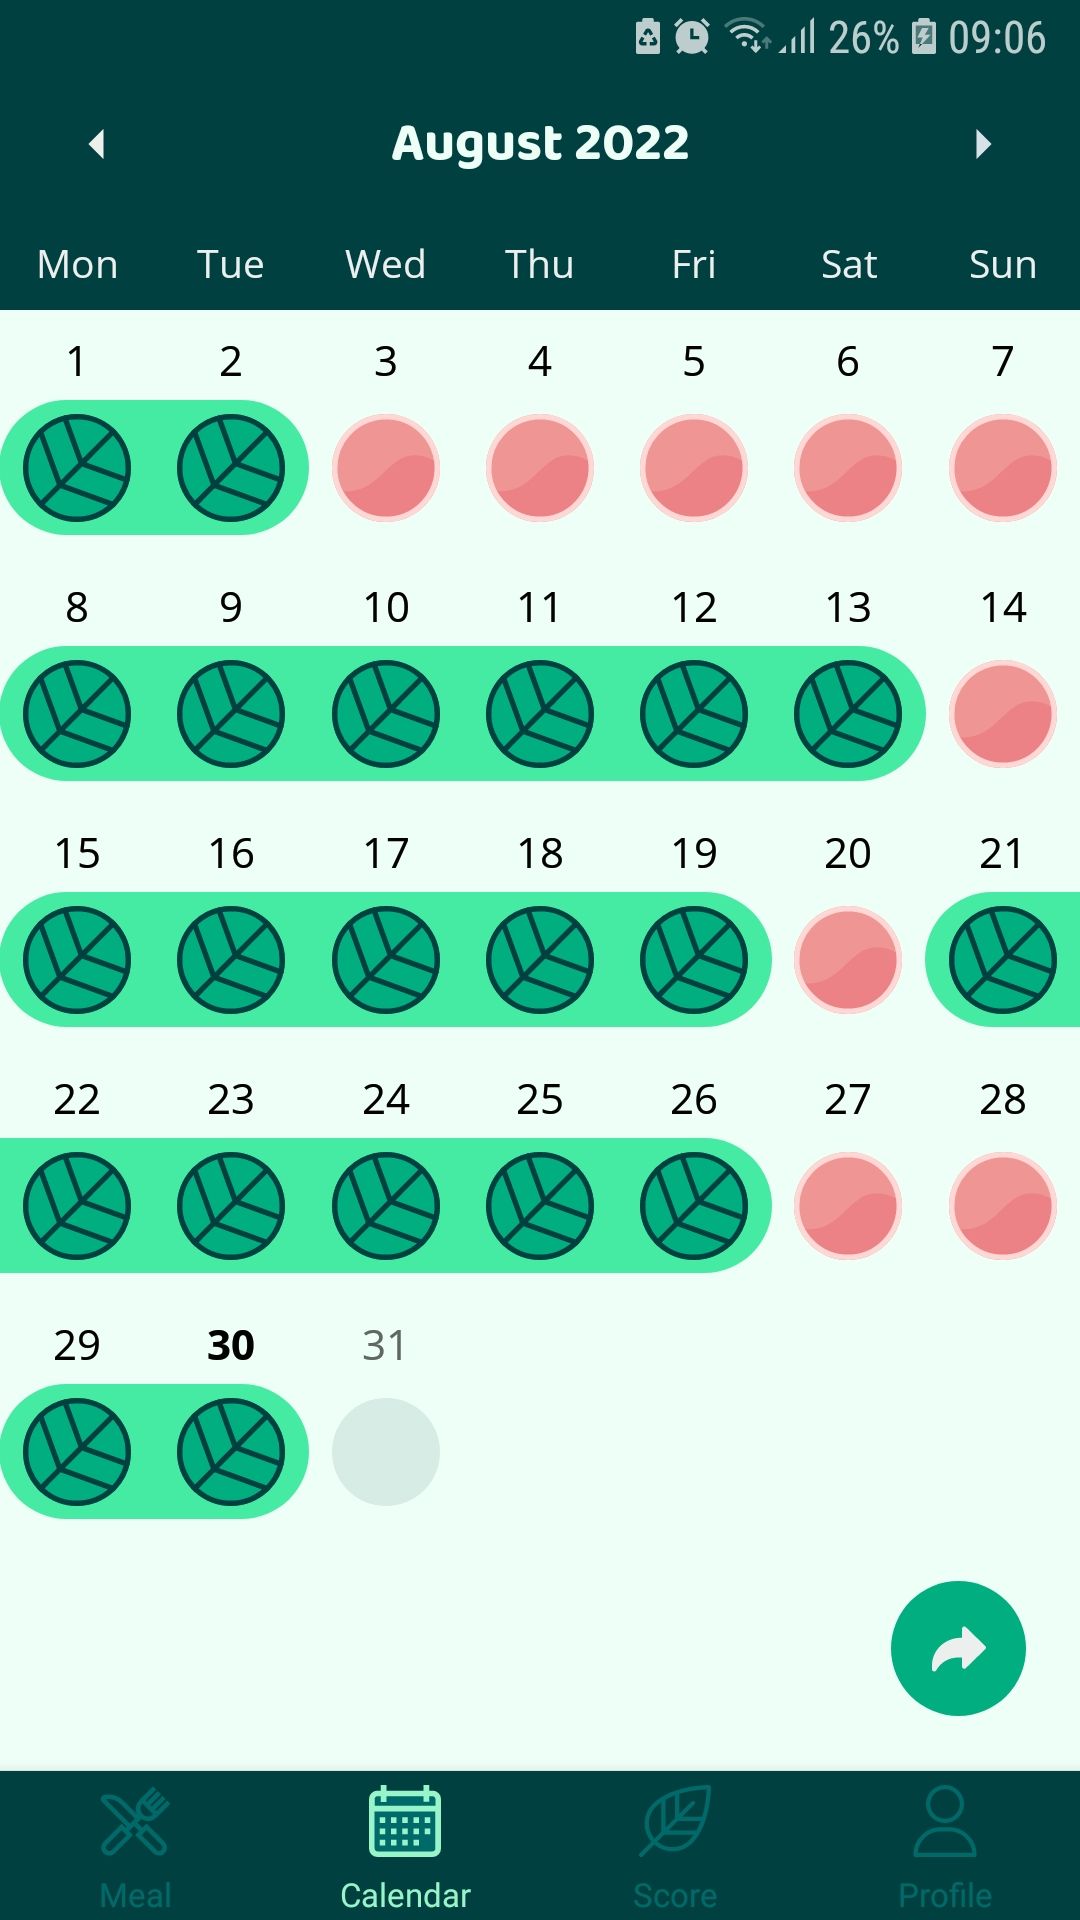 Less Meat intake tracker mobile app calendar